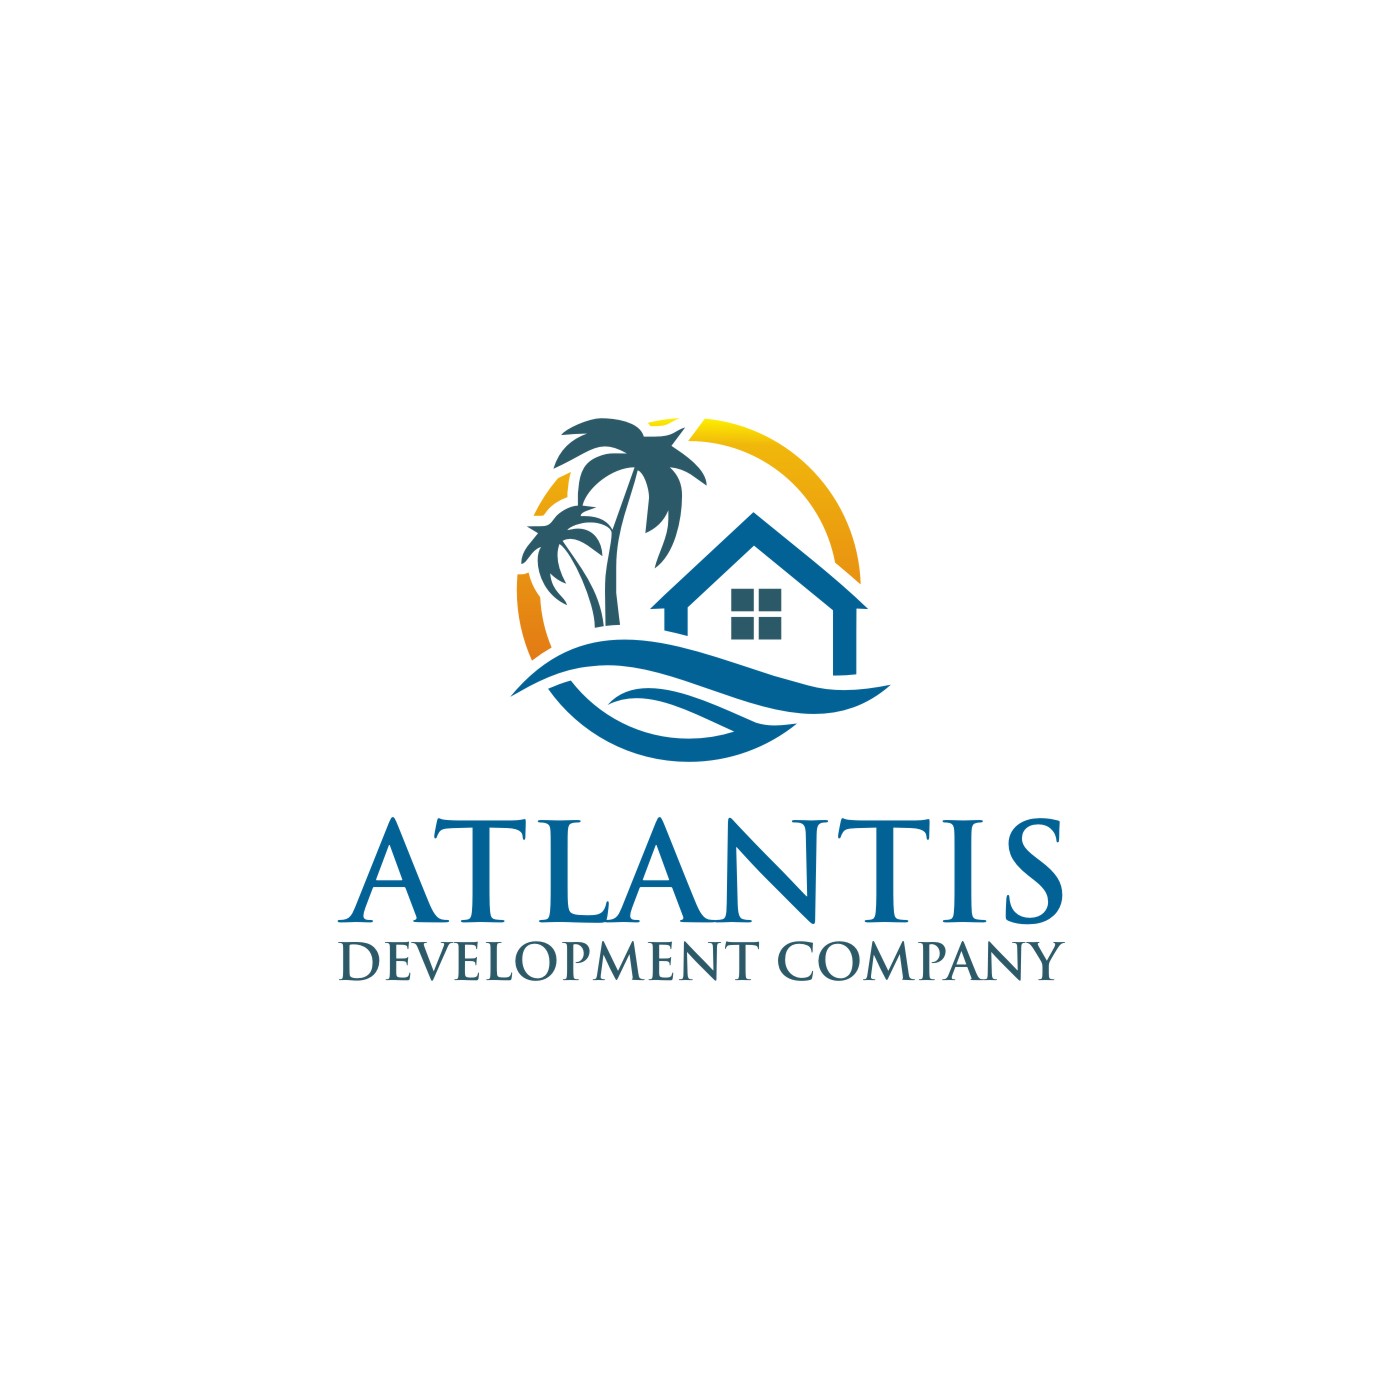 Atlantis Service company